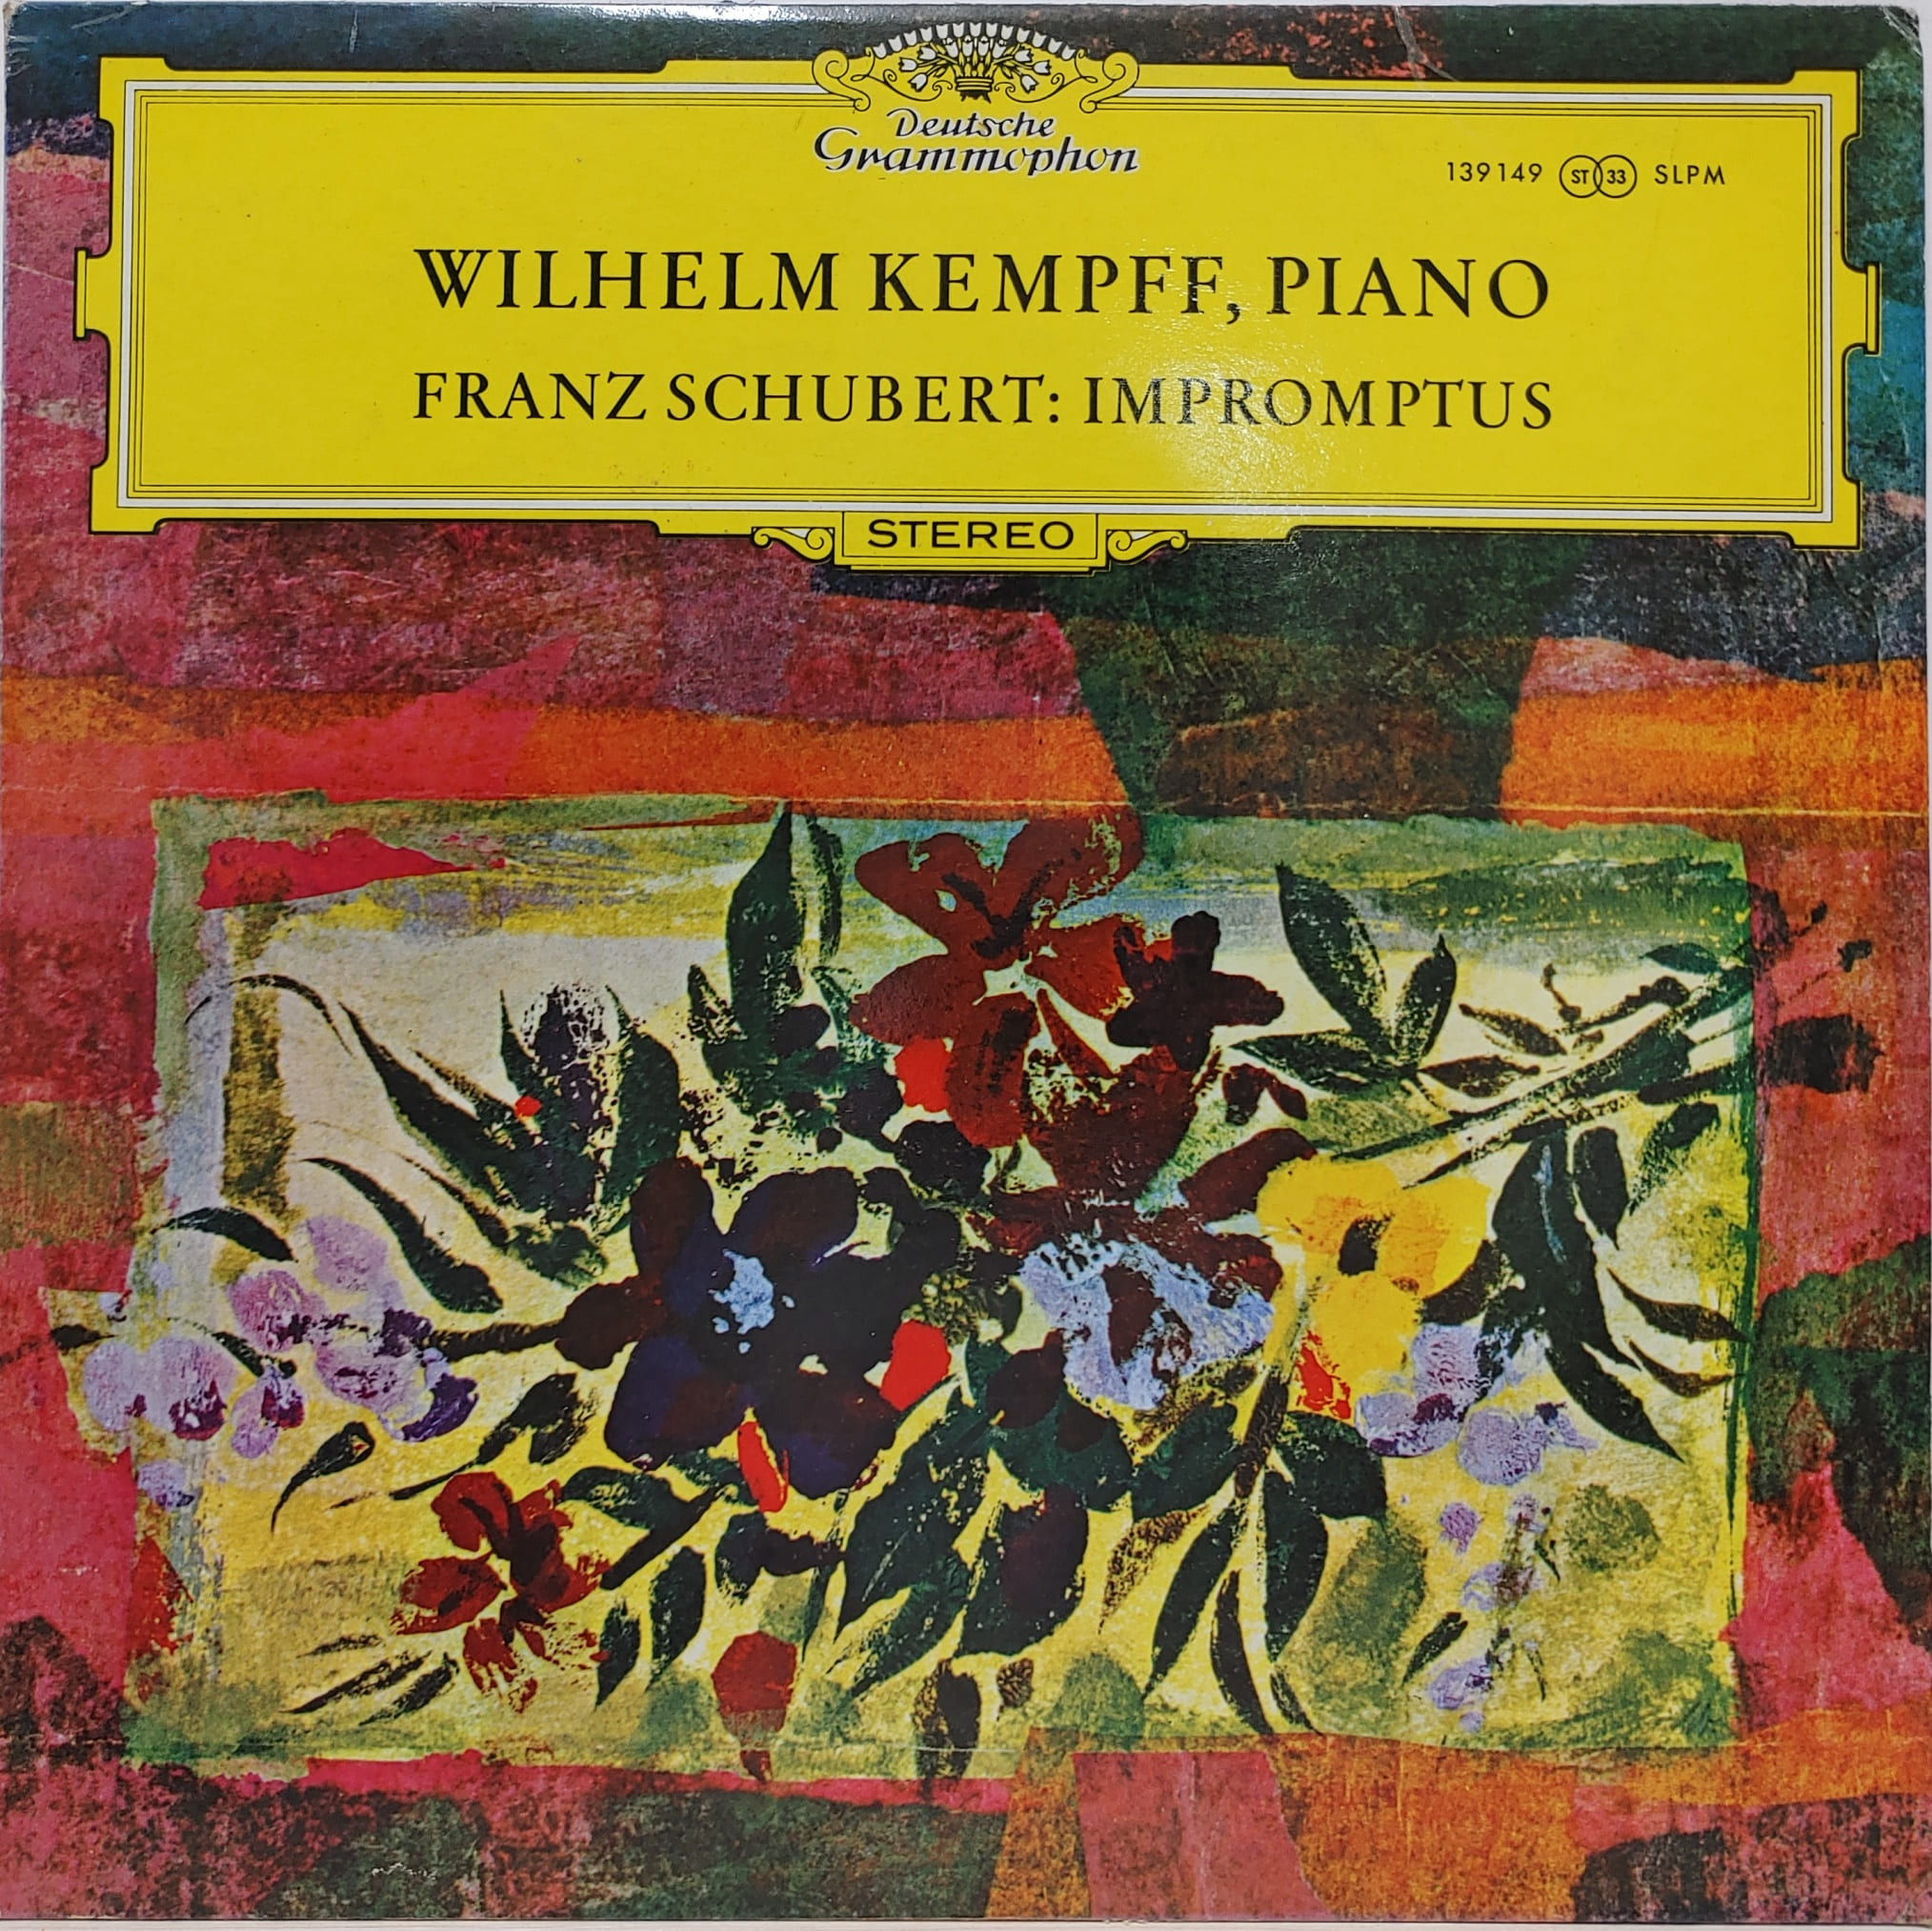 Schubert / Impromptus Wilhelm Kempff